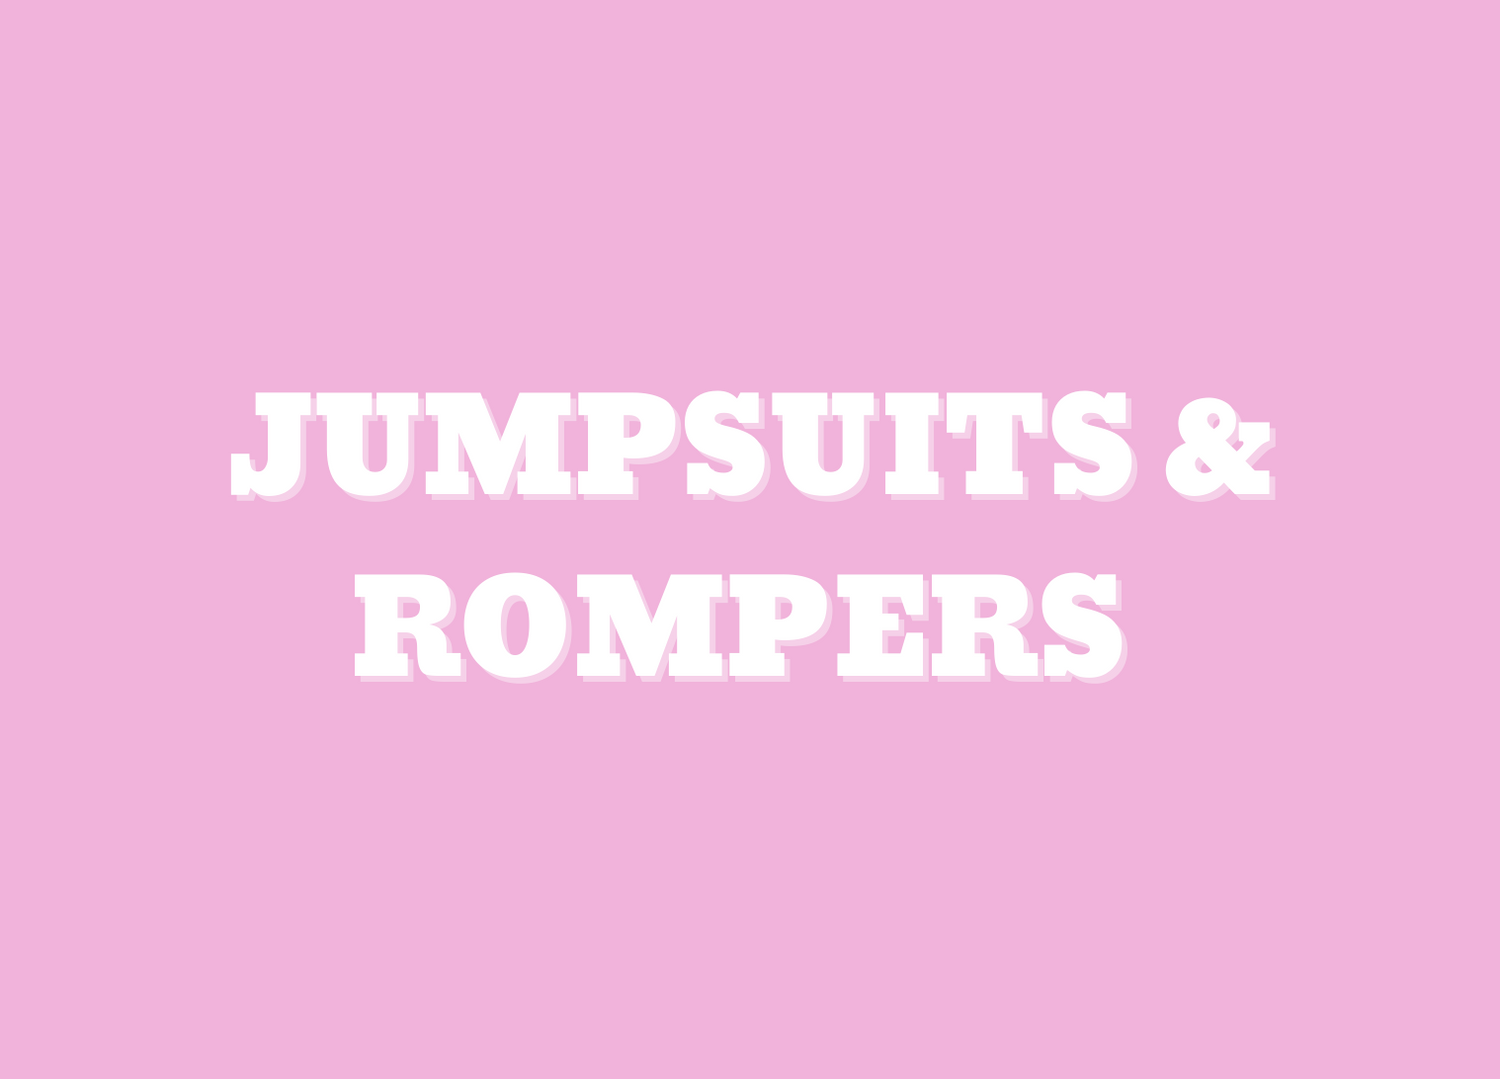 JUMPSUIT & ROMPERS